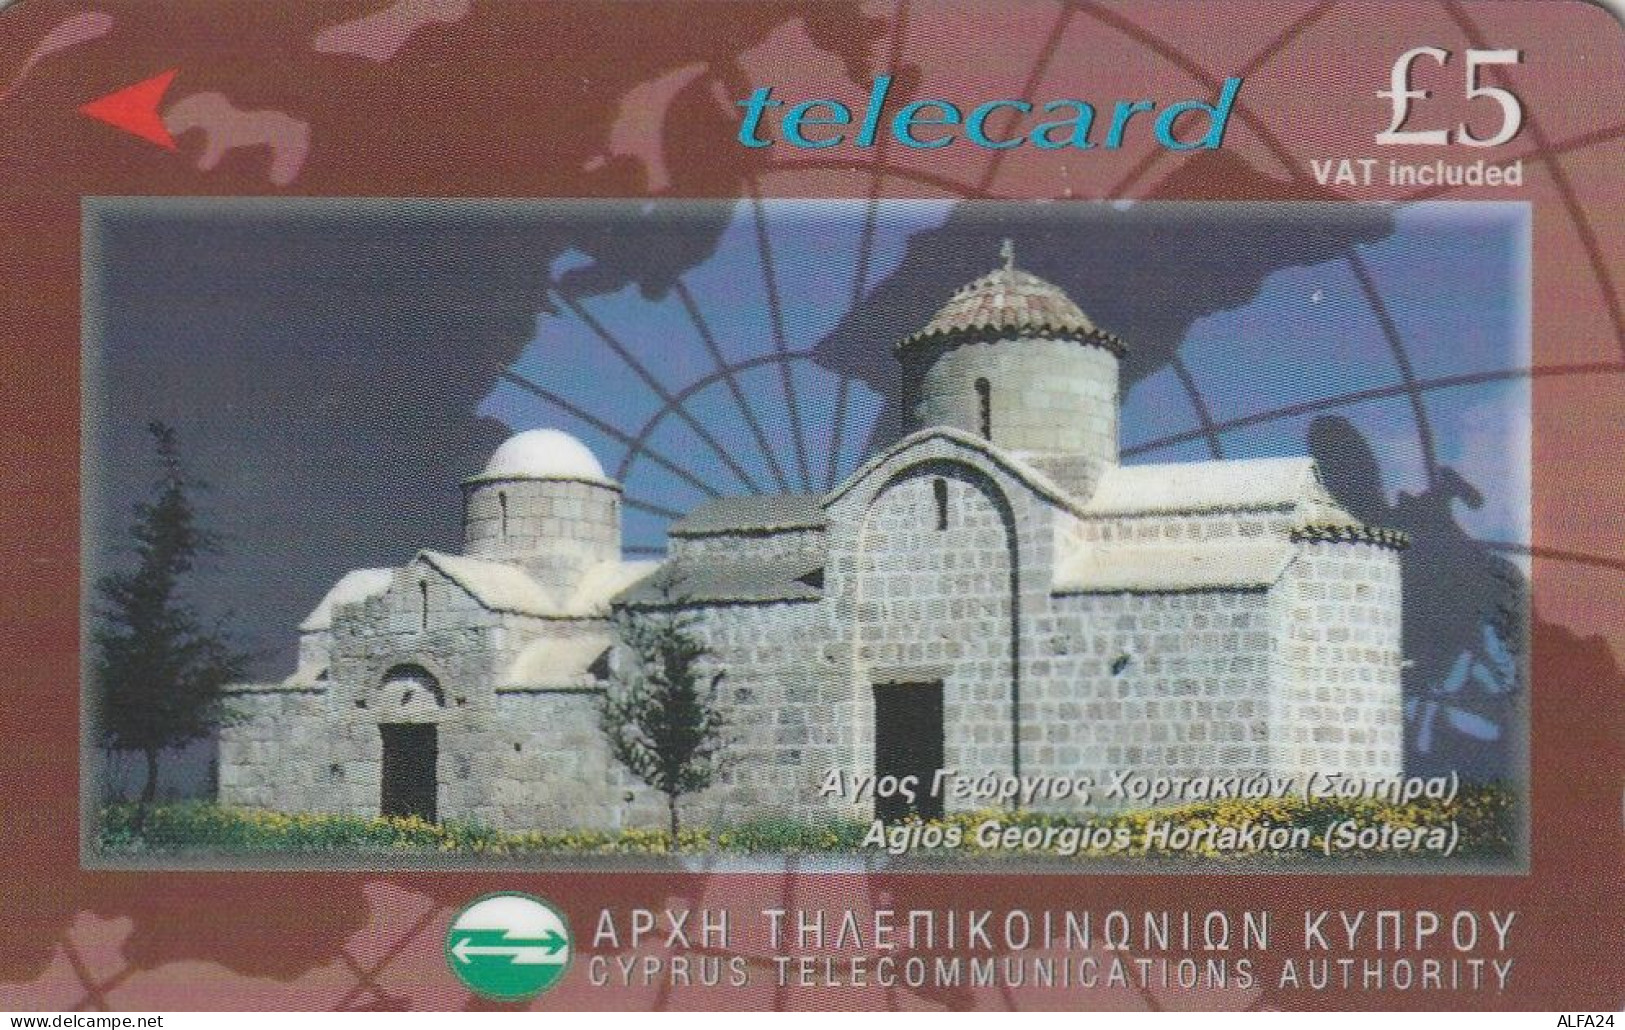 PHONE CARD CIPRO  (CZ1157 - Zypern